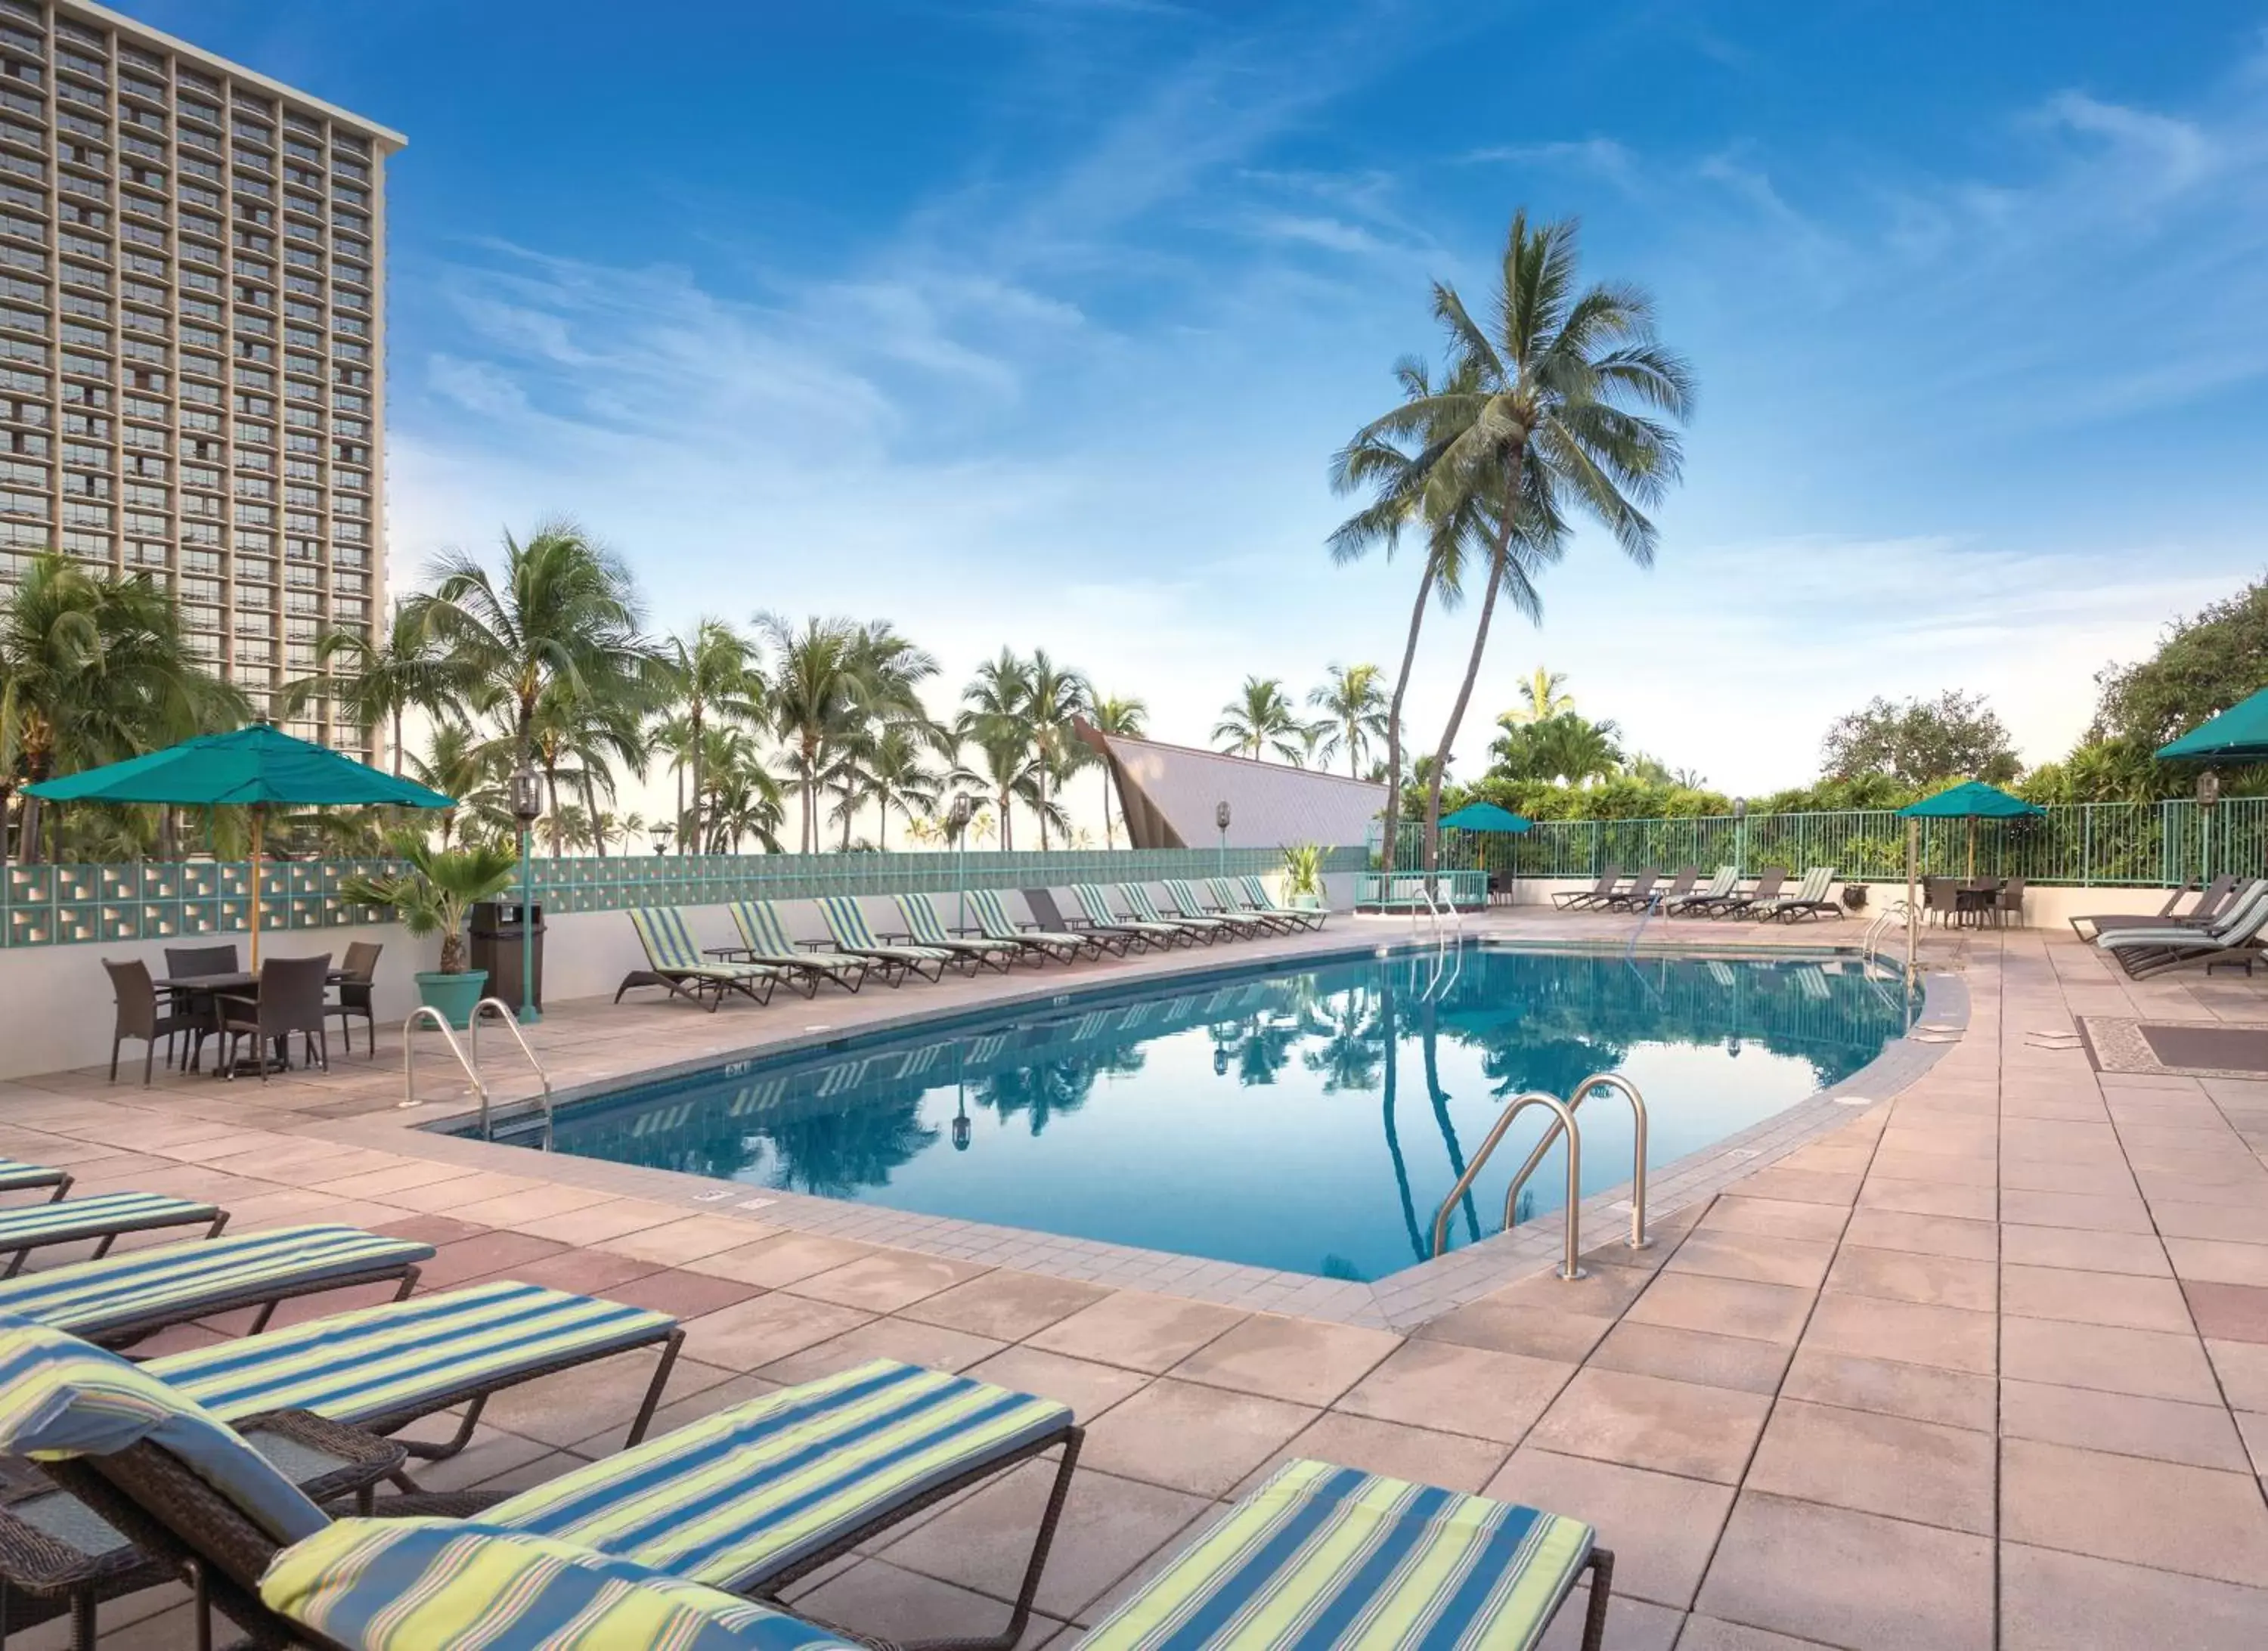 Swimming Pool in Waikiki Marina Resort at the Ilikai